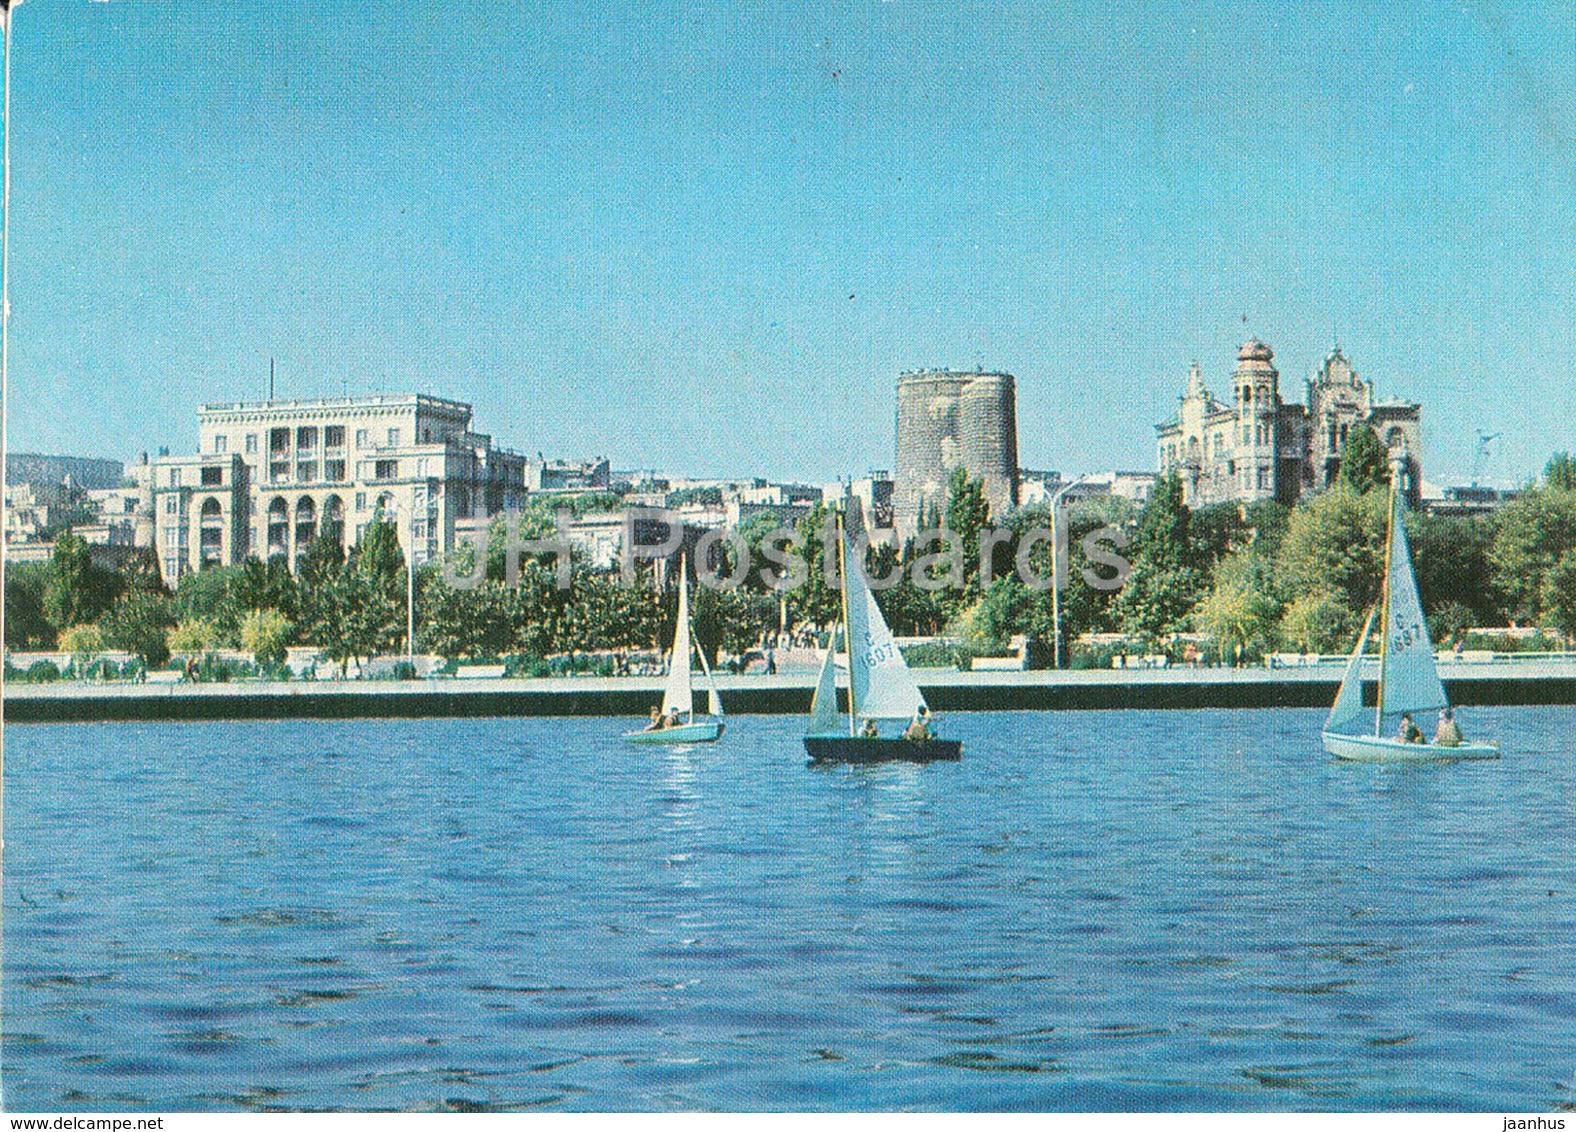 Baku - Primorsky Park - sailing boat - postal stationery - 1975 - Azerbaijan USSR -  unused - JH Postcards